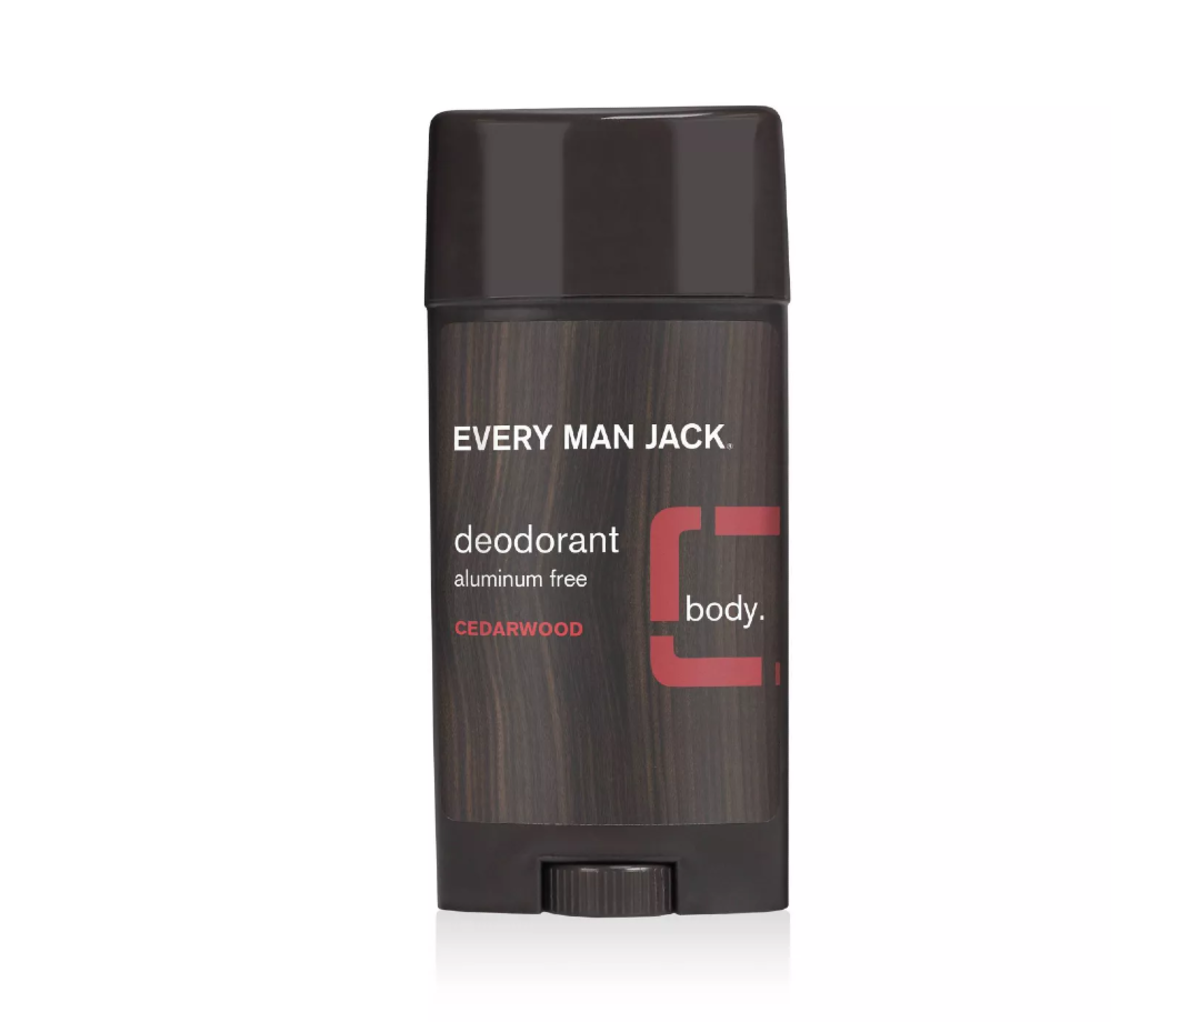 Every Man Jack's Men's Aluminum-Free Cedarwood Deodorant